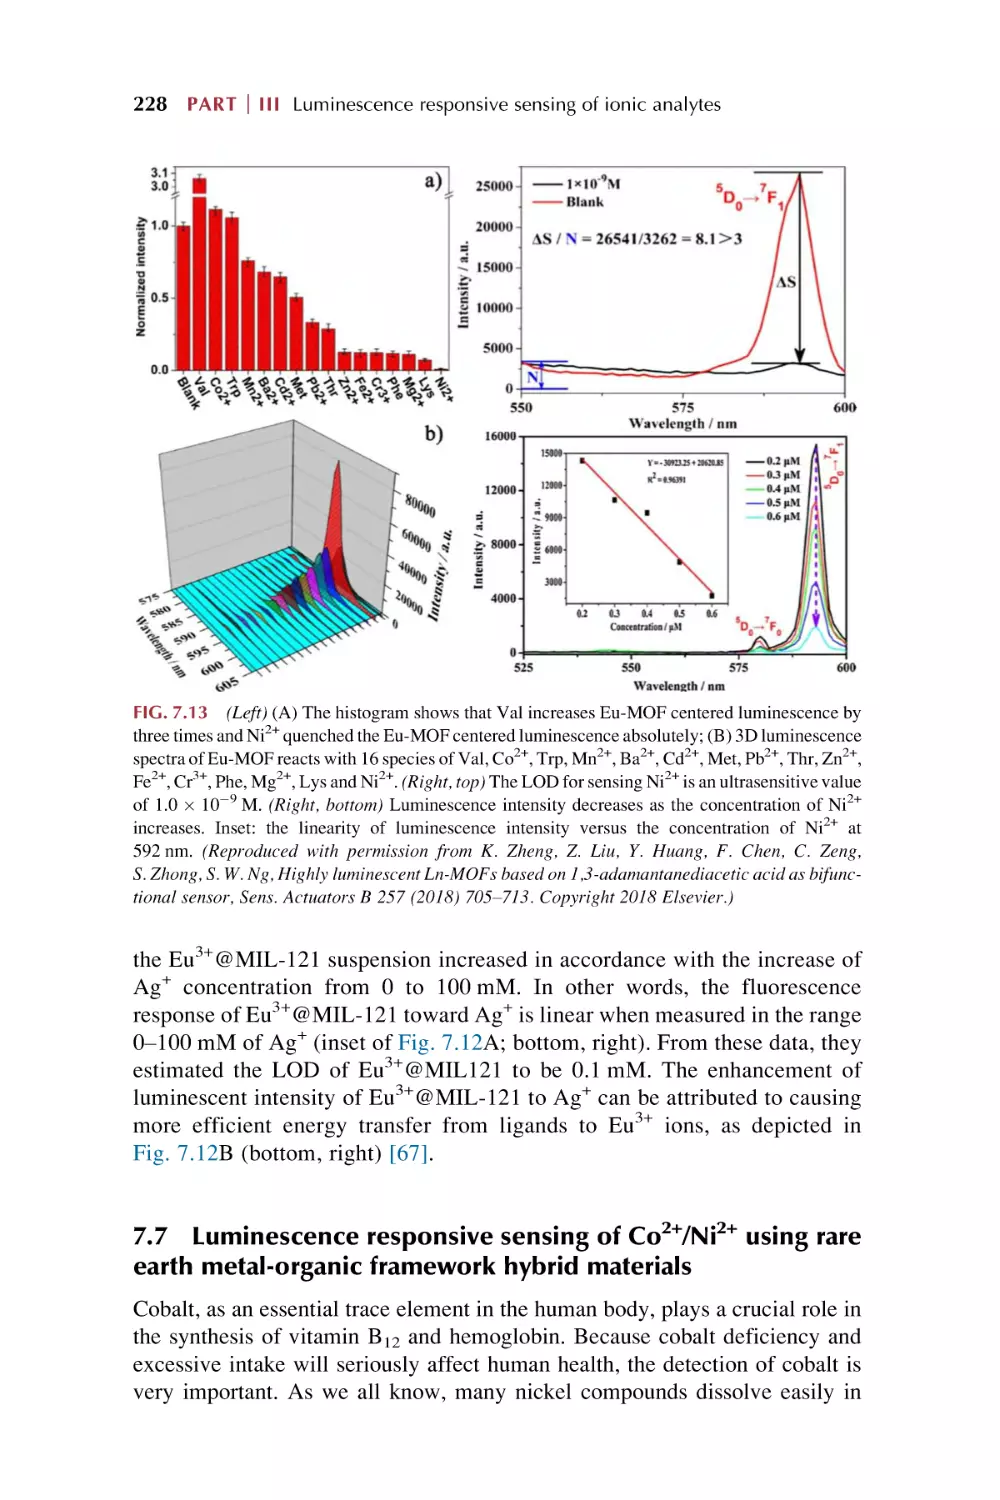 7.7. Luminescence responsive sensing of Co2+/Ni2+ using rare earth metal-organic framework hybrid materials